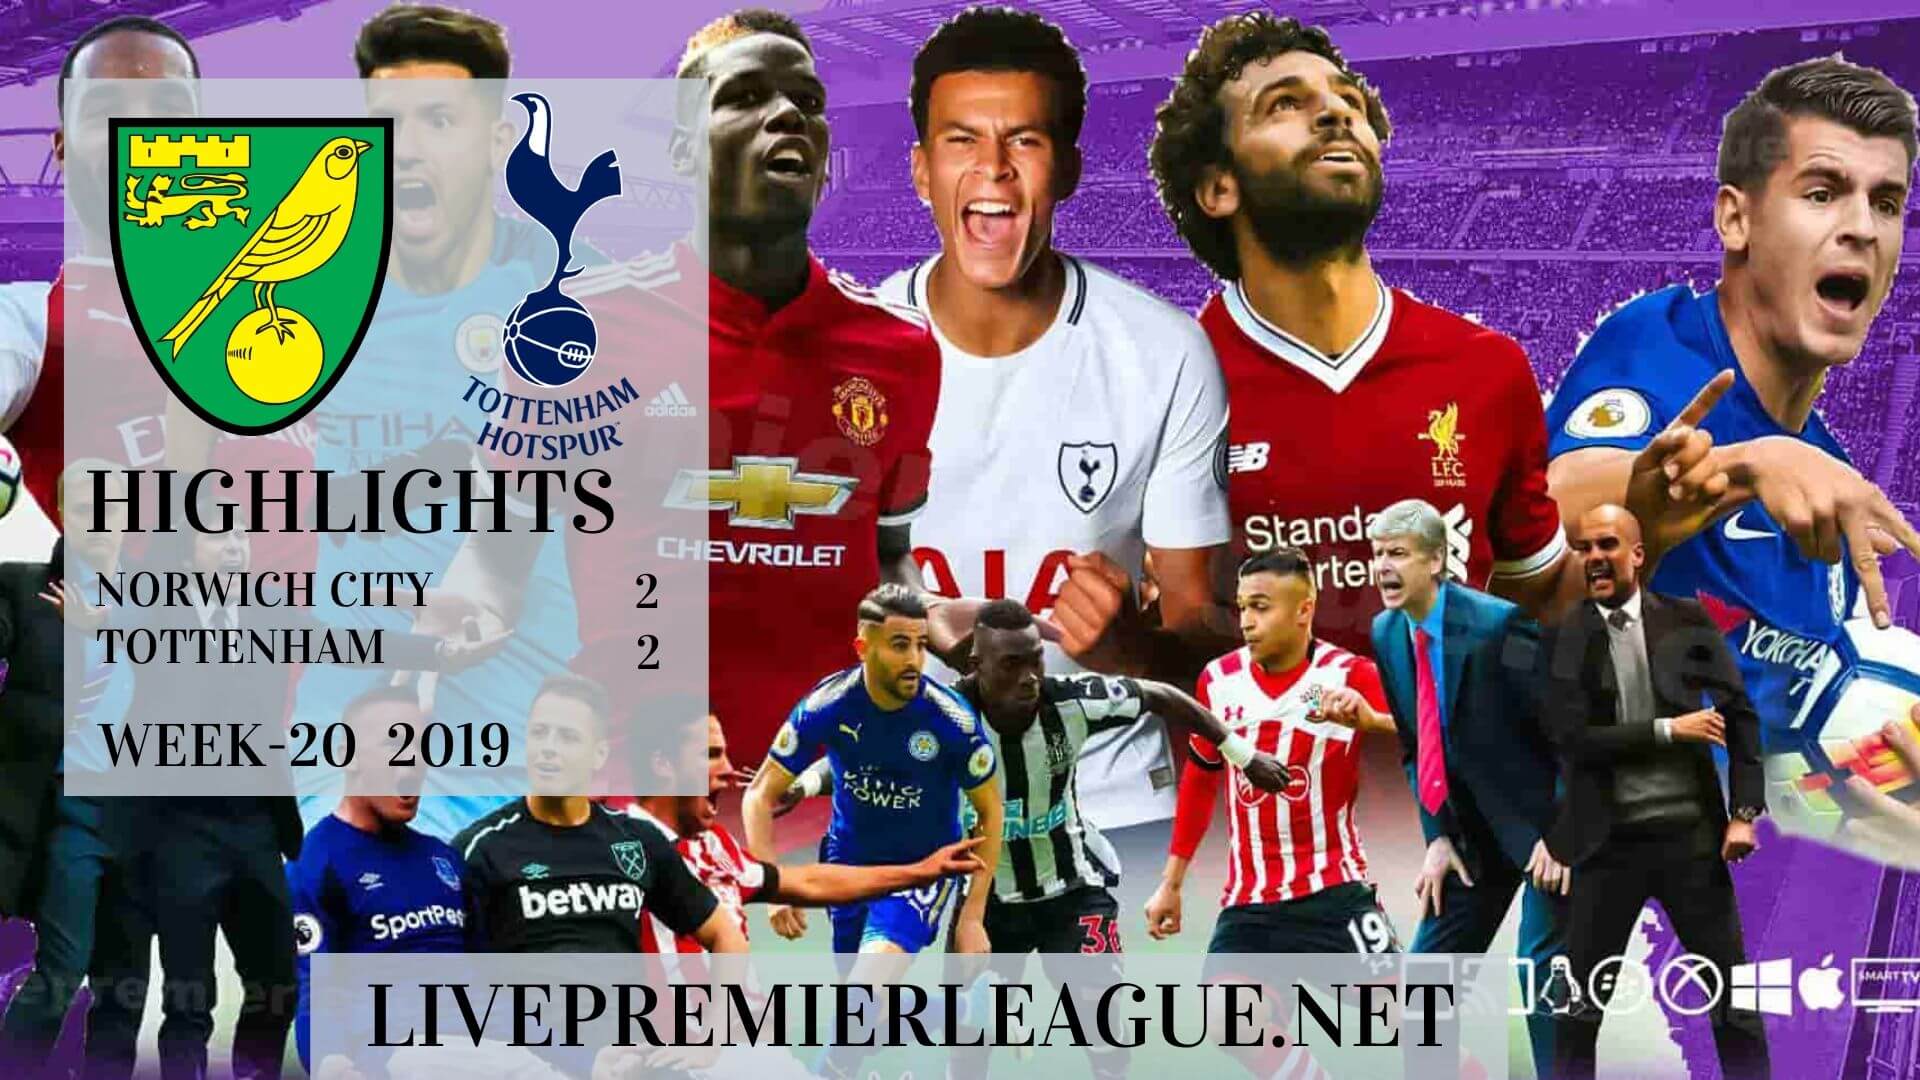 Norwich City Vs Tottenham Hotspur Highlights 2019 Week 20